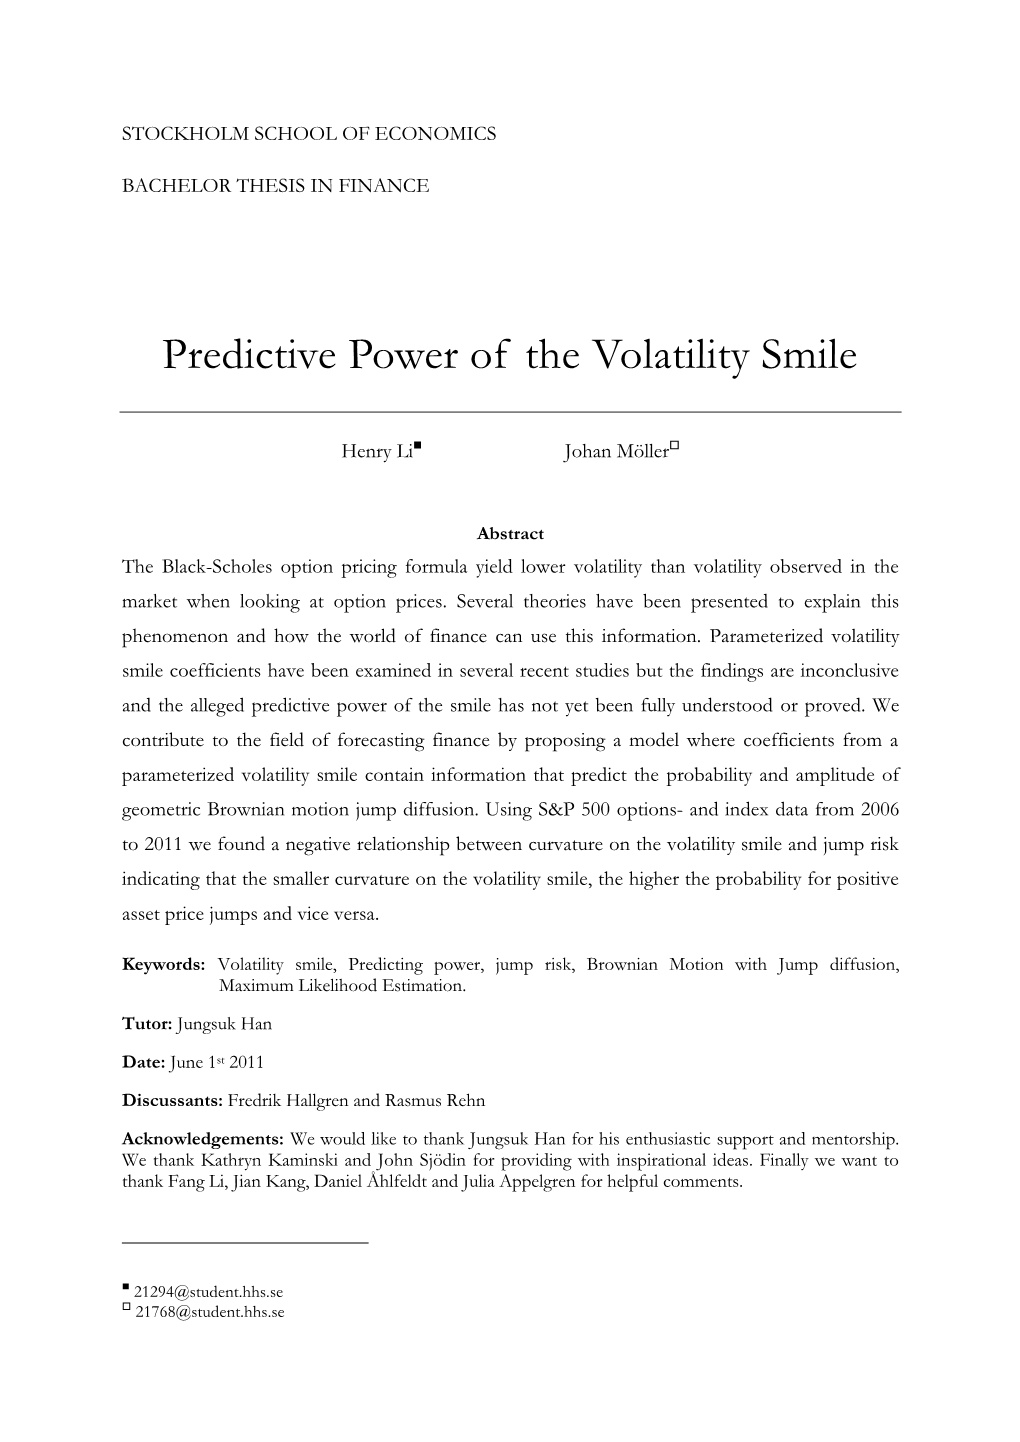 Predictive Power of the Volatility Smile